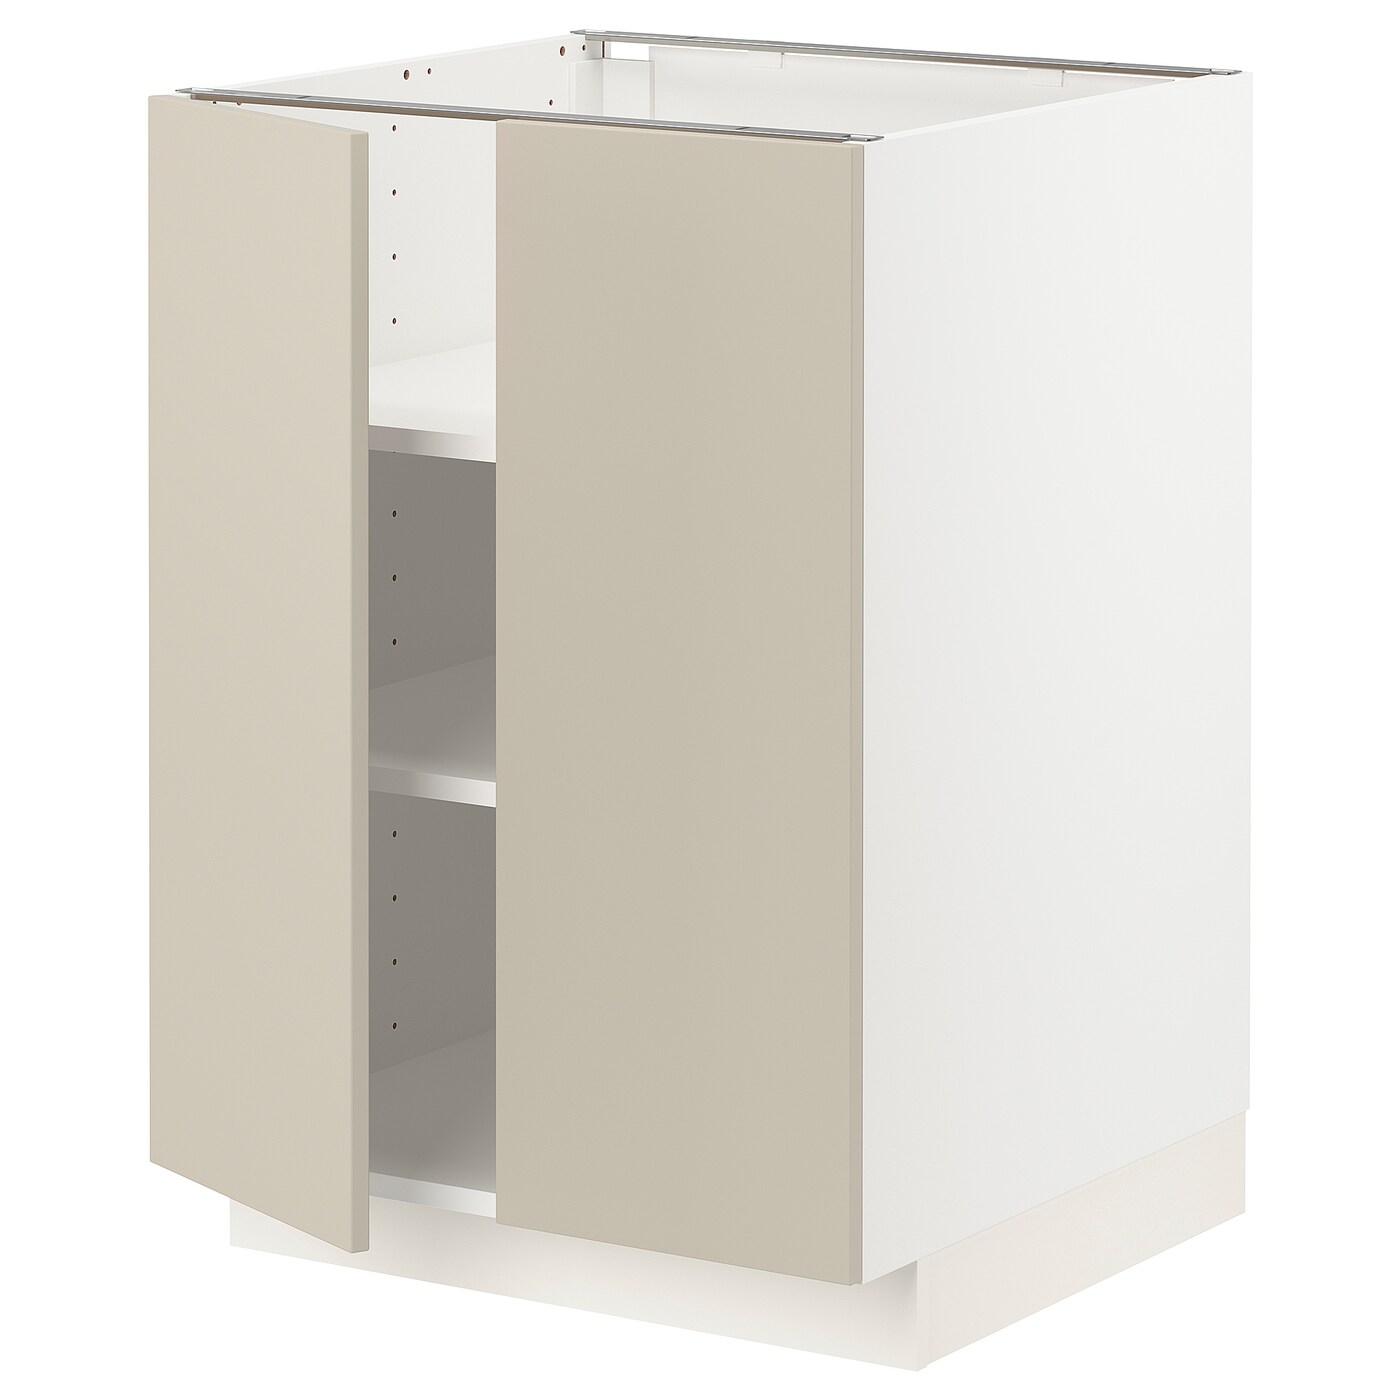 Напольный шкаф - METOD IKEA/ МЕТОД ИКЕА,  60х88 см, белый/бежевый